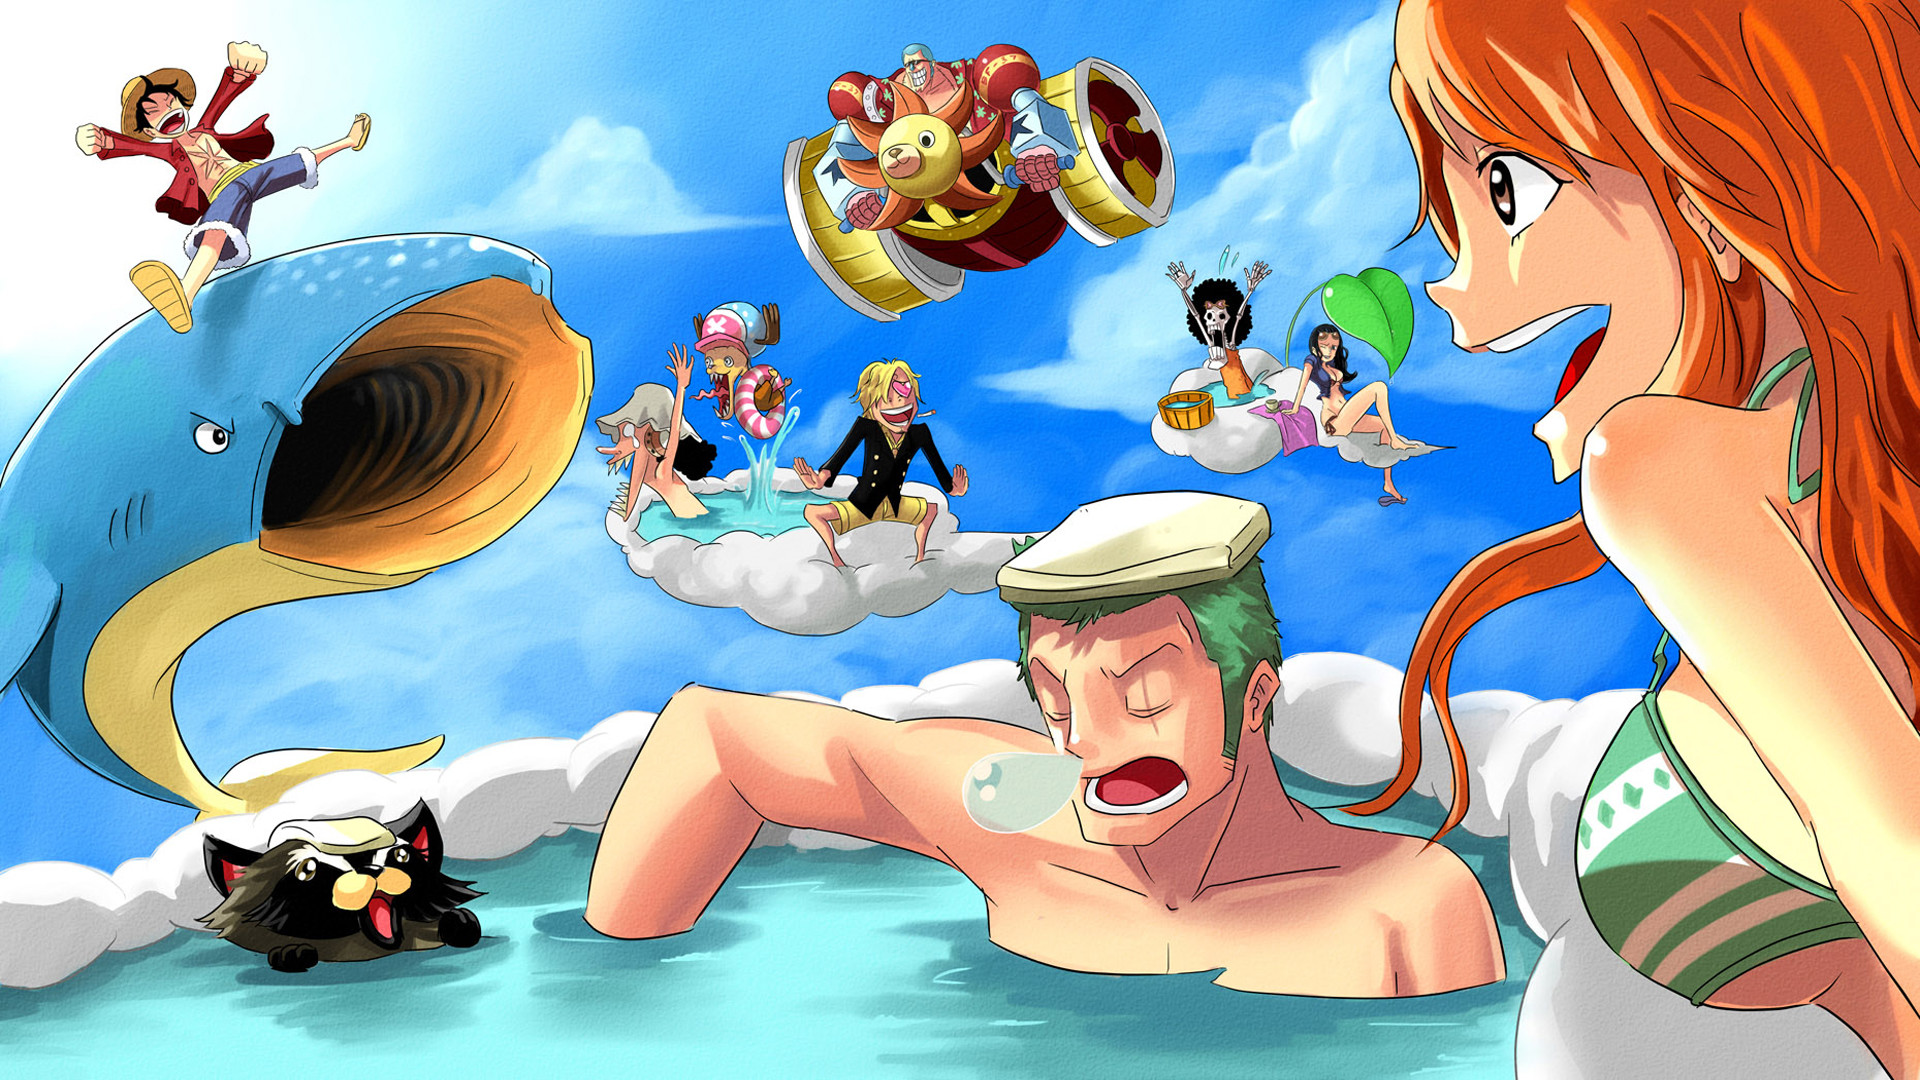 1920x1080 Anime - One Piece Himmel Wolke Fisch Wasser Nami (One Piece) Zoro Roronoa  Nico